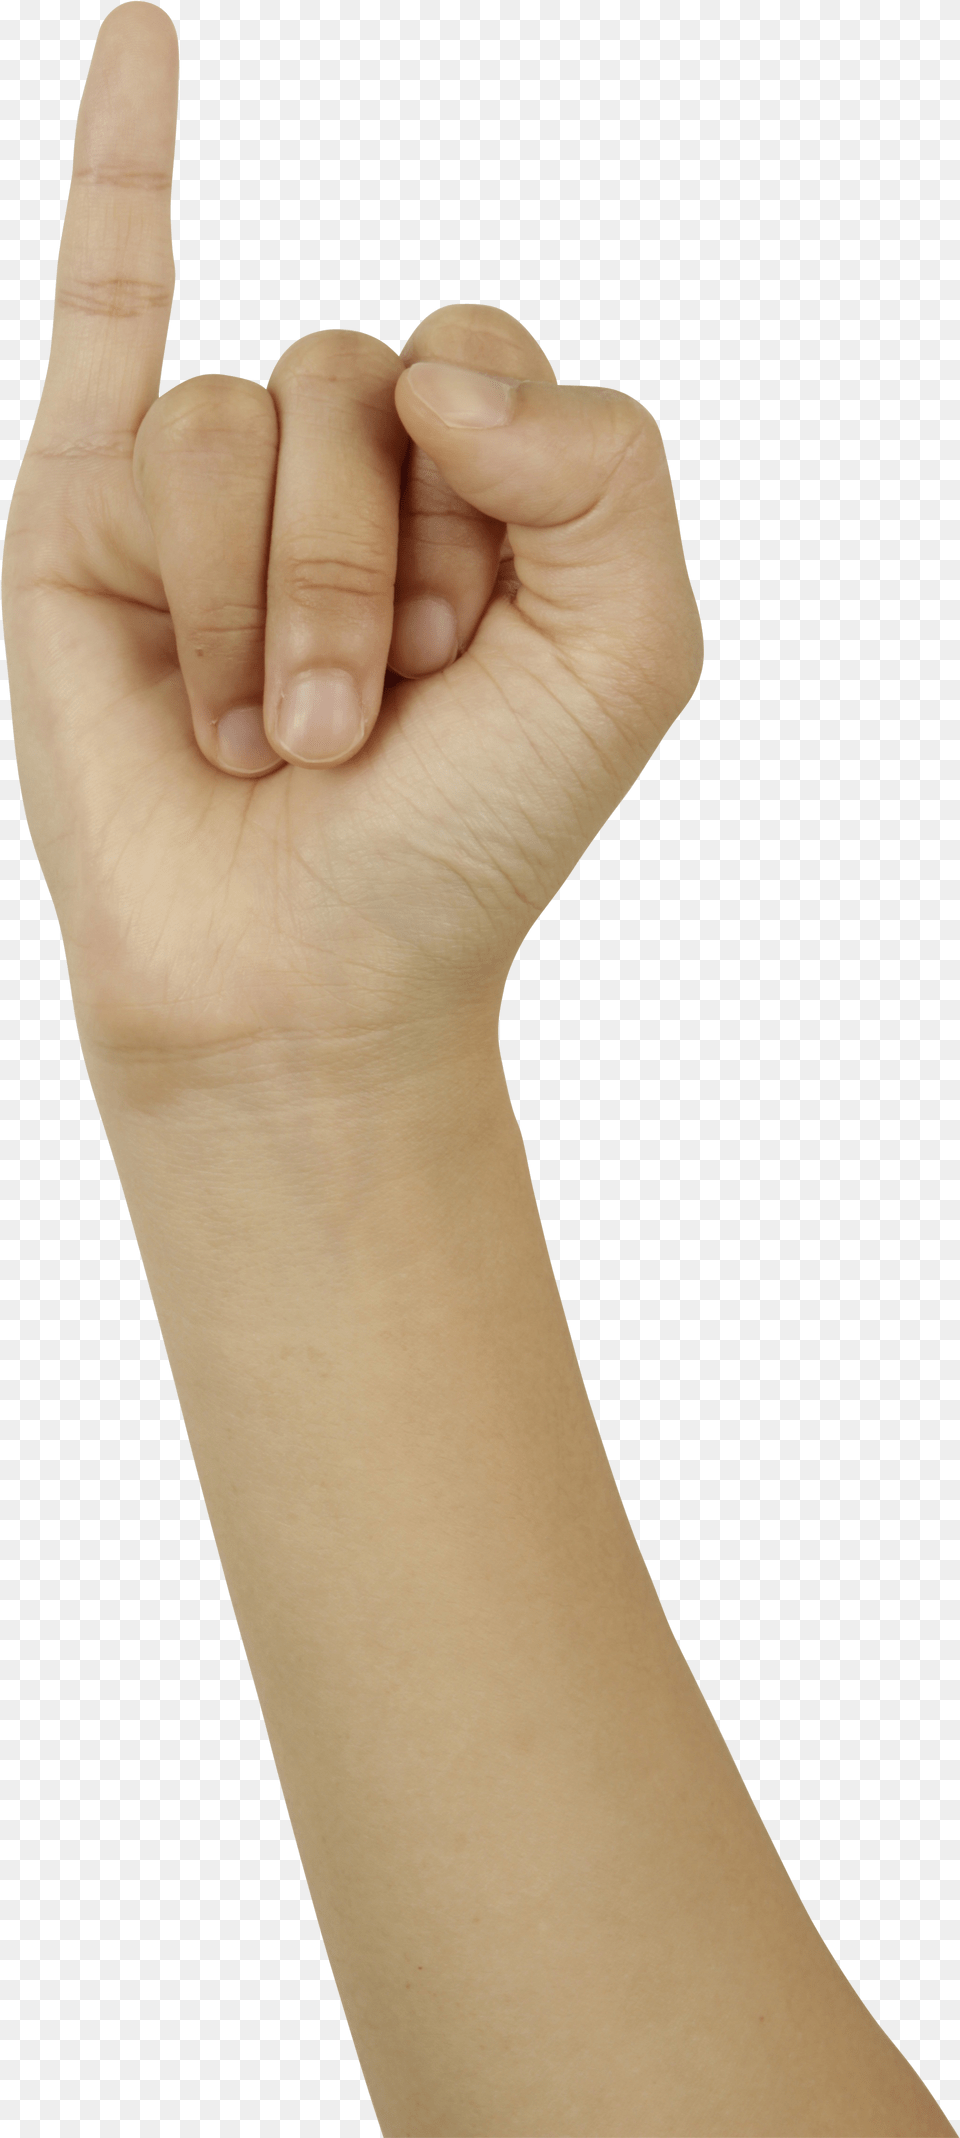 Pinky Finger Sign Language Png Image